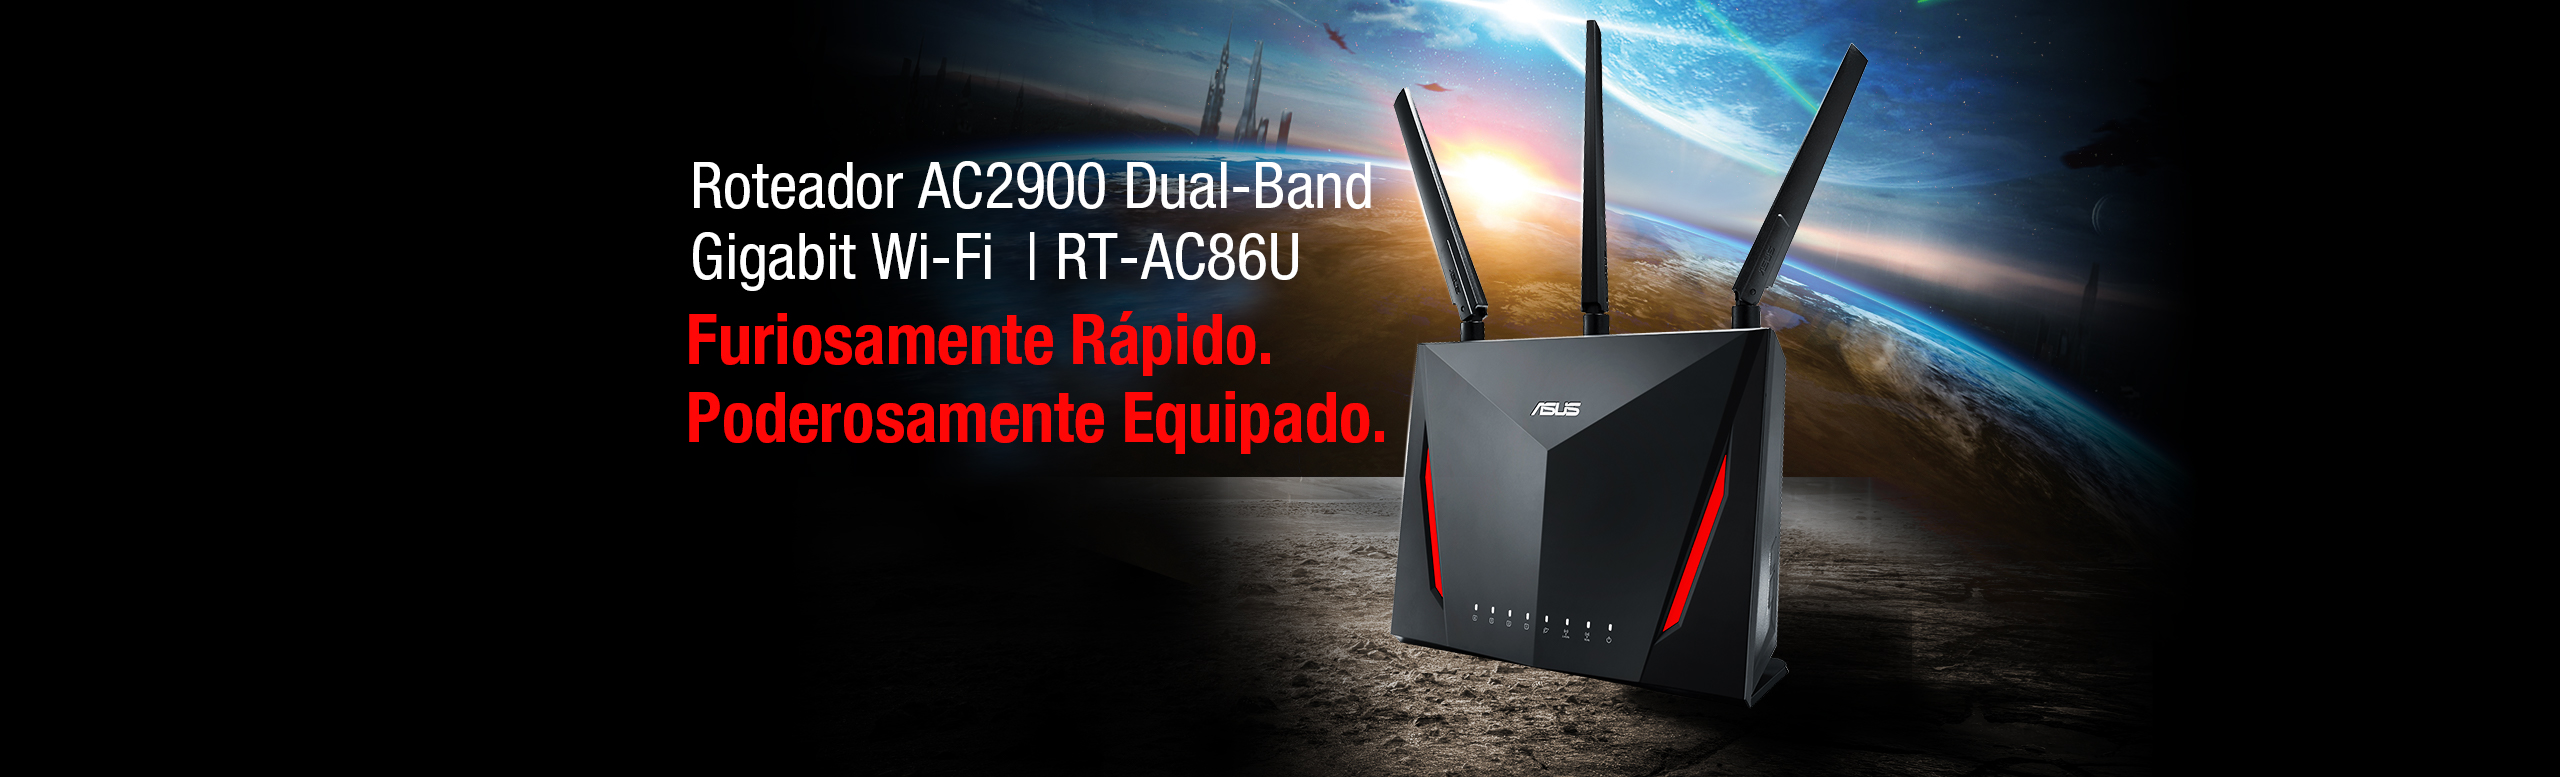 Roteador AC2900 Dual-Band Gigabit Wi-Fi RT AC86U